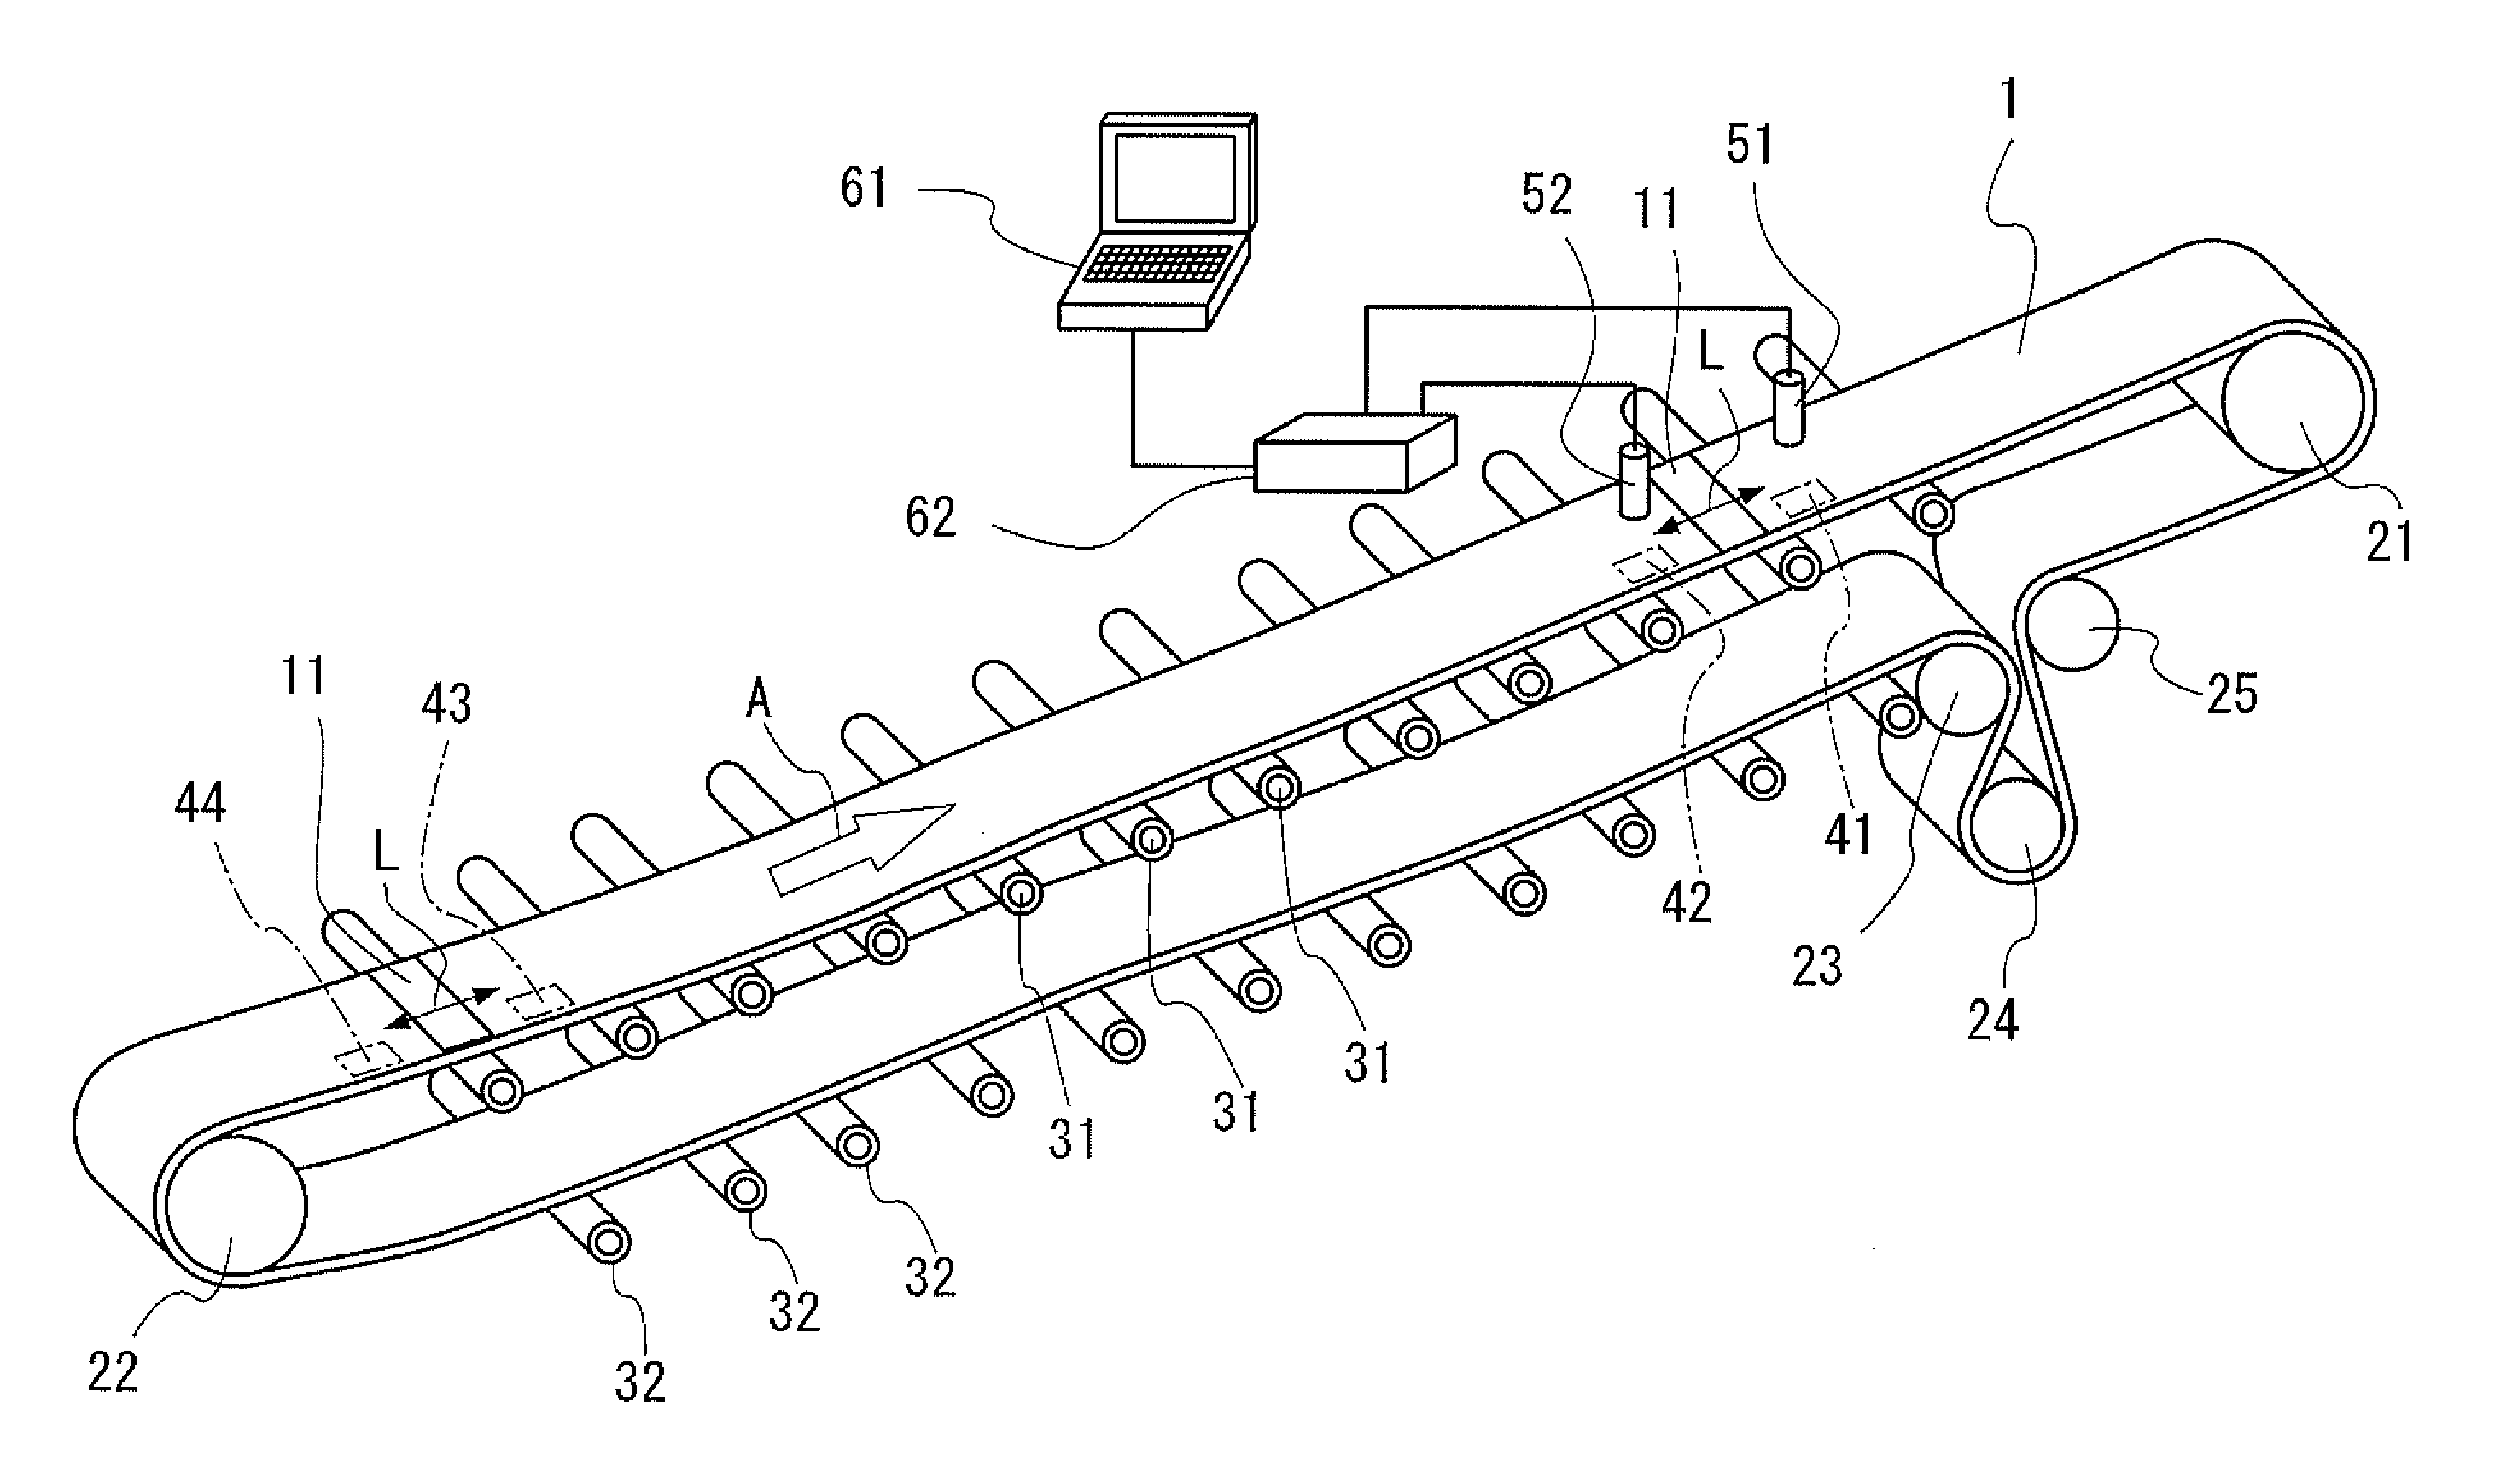 Monitoring system of conveyor belt